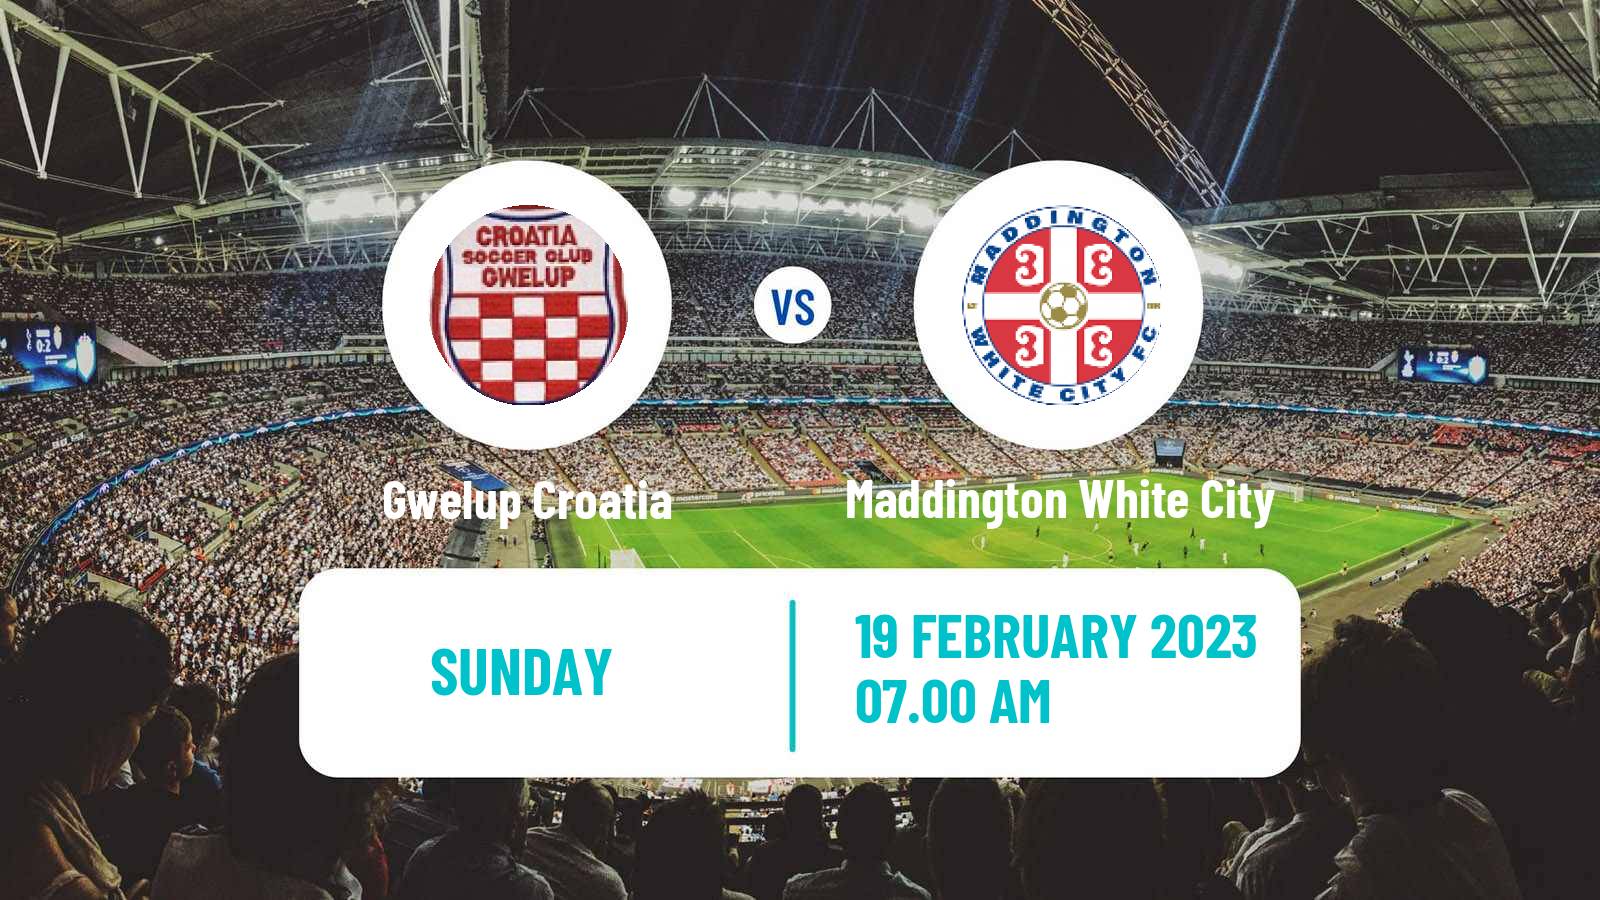 Soccer Club Friendly Gwelup Croatia - Maddington White City